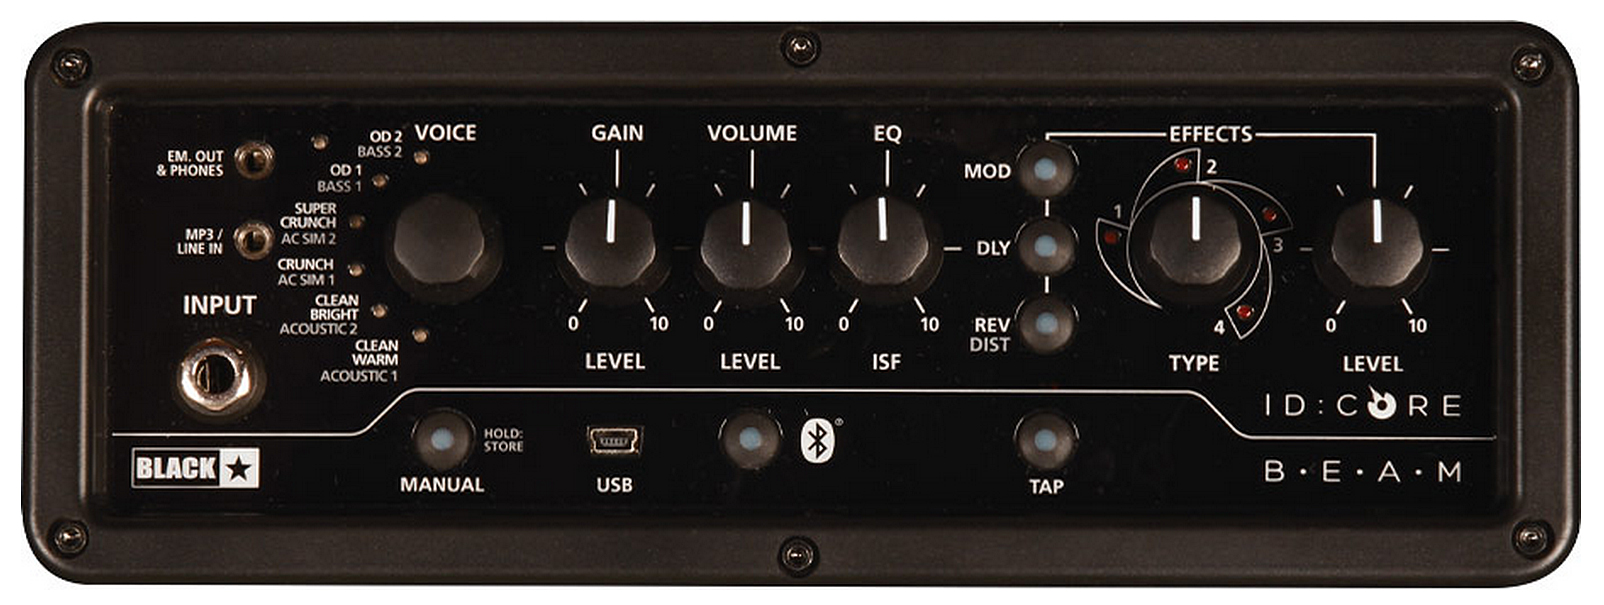 Blackstar Id:core Beam Bluetooth Amplifier 15w 2x5 - Electric guitar combo amp - Variation 2